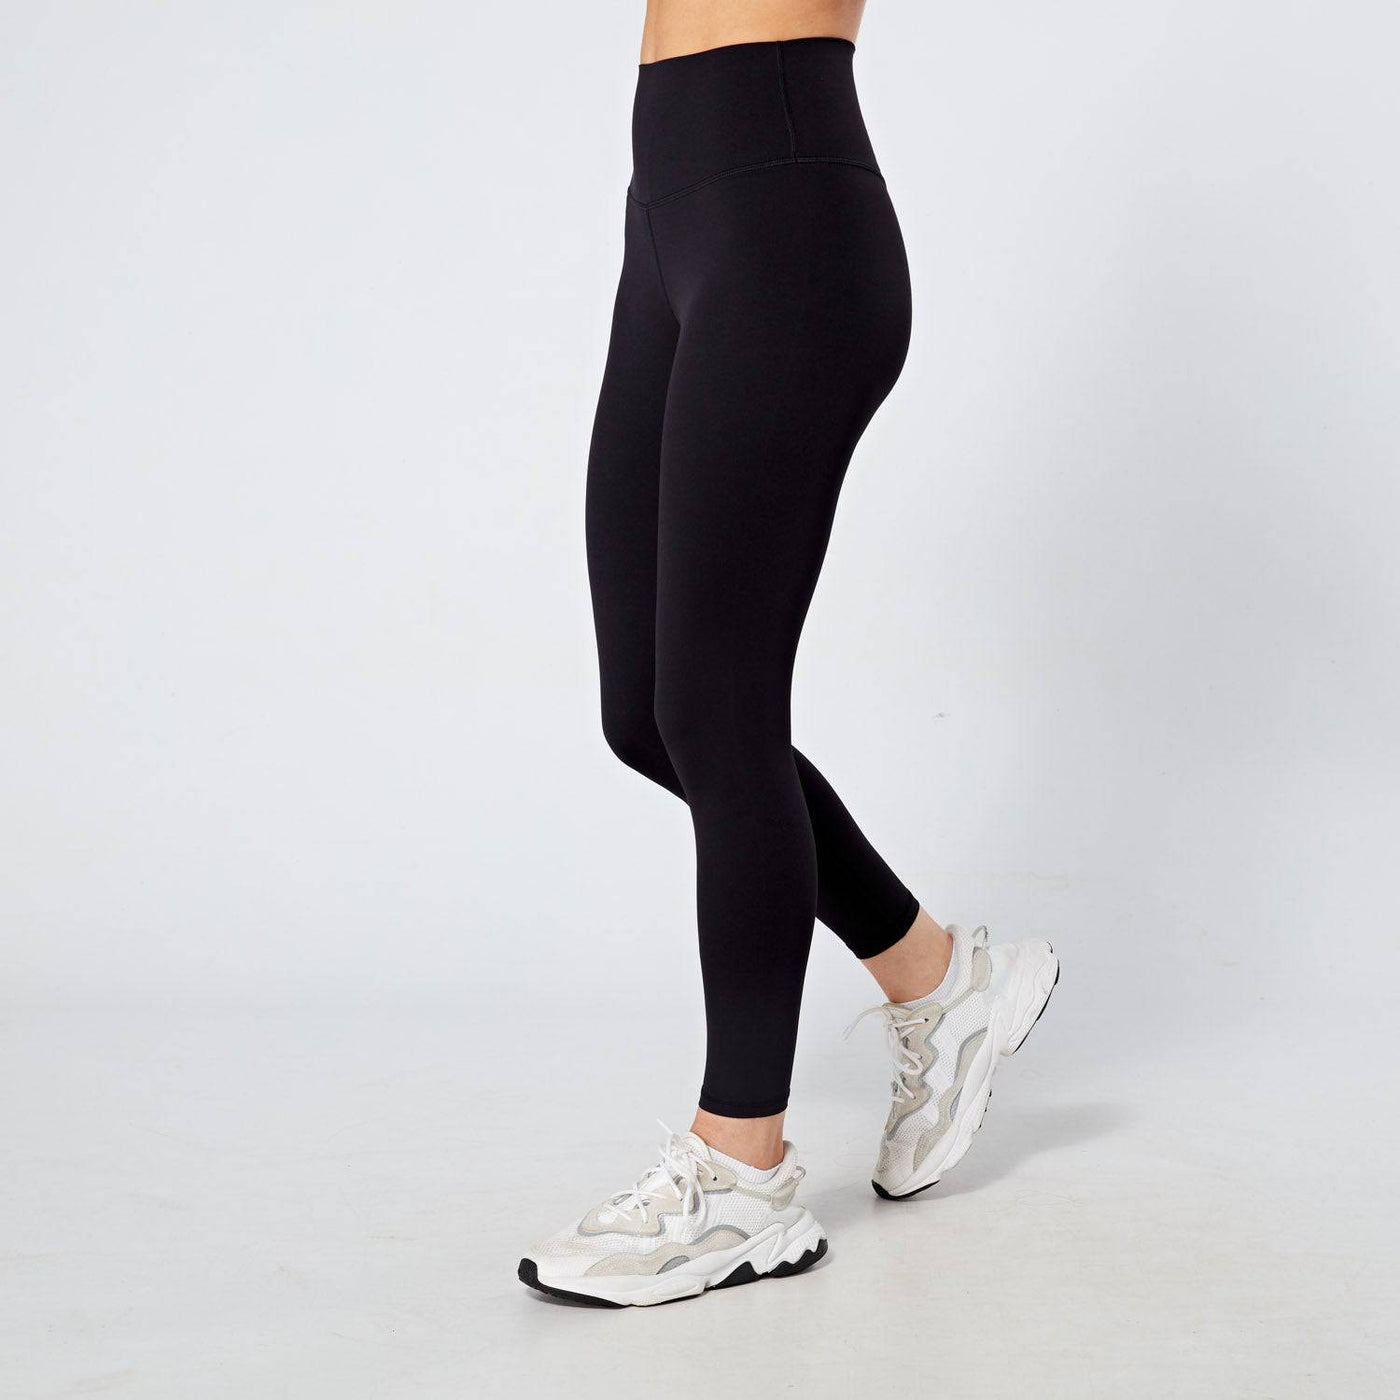 Generic New Yoga Pants Sport Women Fitness Leggings Gym Color 20_S